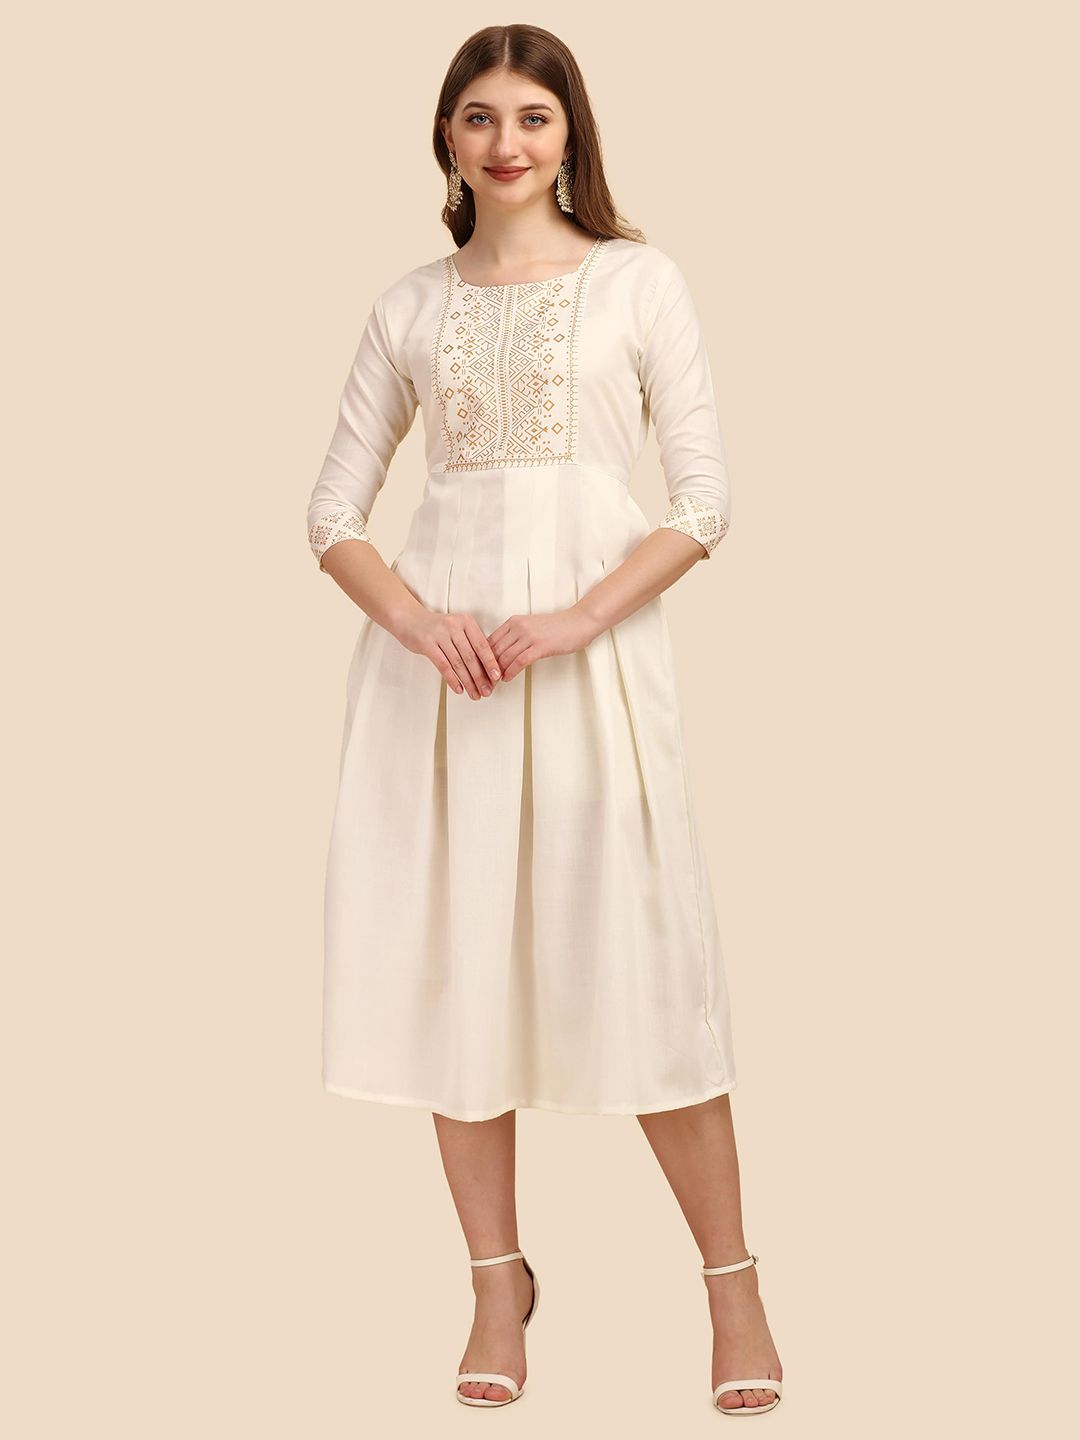 Paralians White Ethnic Motifs A-Line Midi Dress Price in India